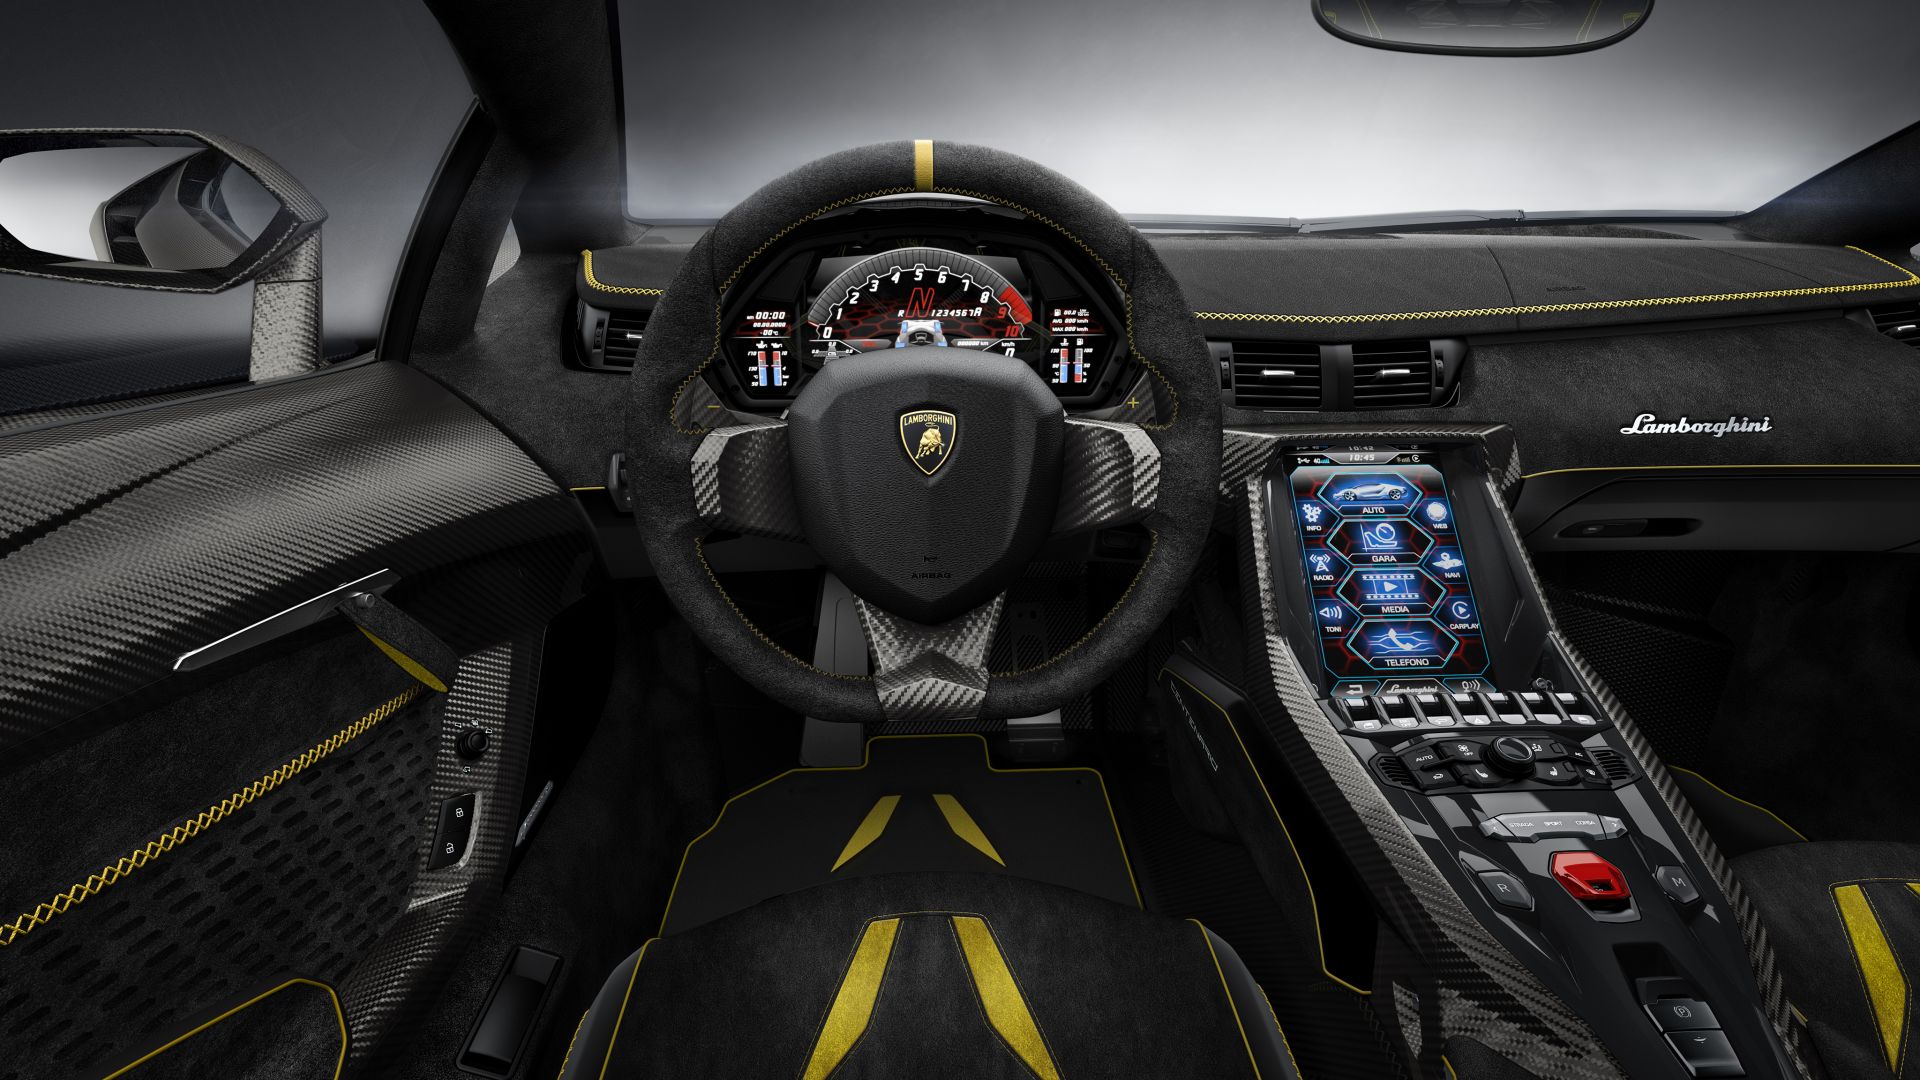 Ламборджини Центенарио, Женева Авто Шоу 2016, интерьер, Lamborghini Centenario, Geneva Auto Show 2016, interior (horizontal)